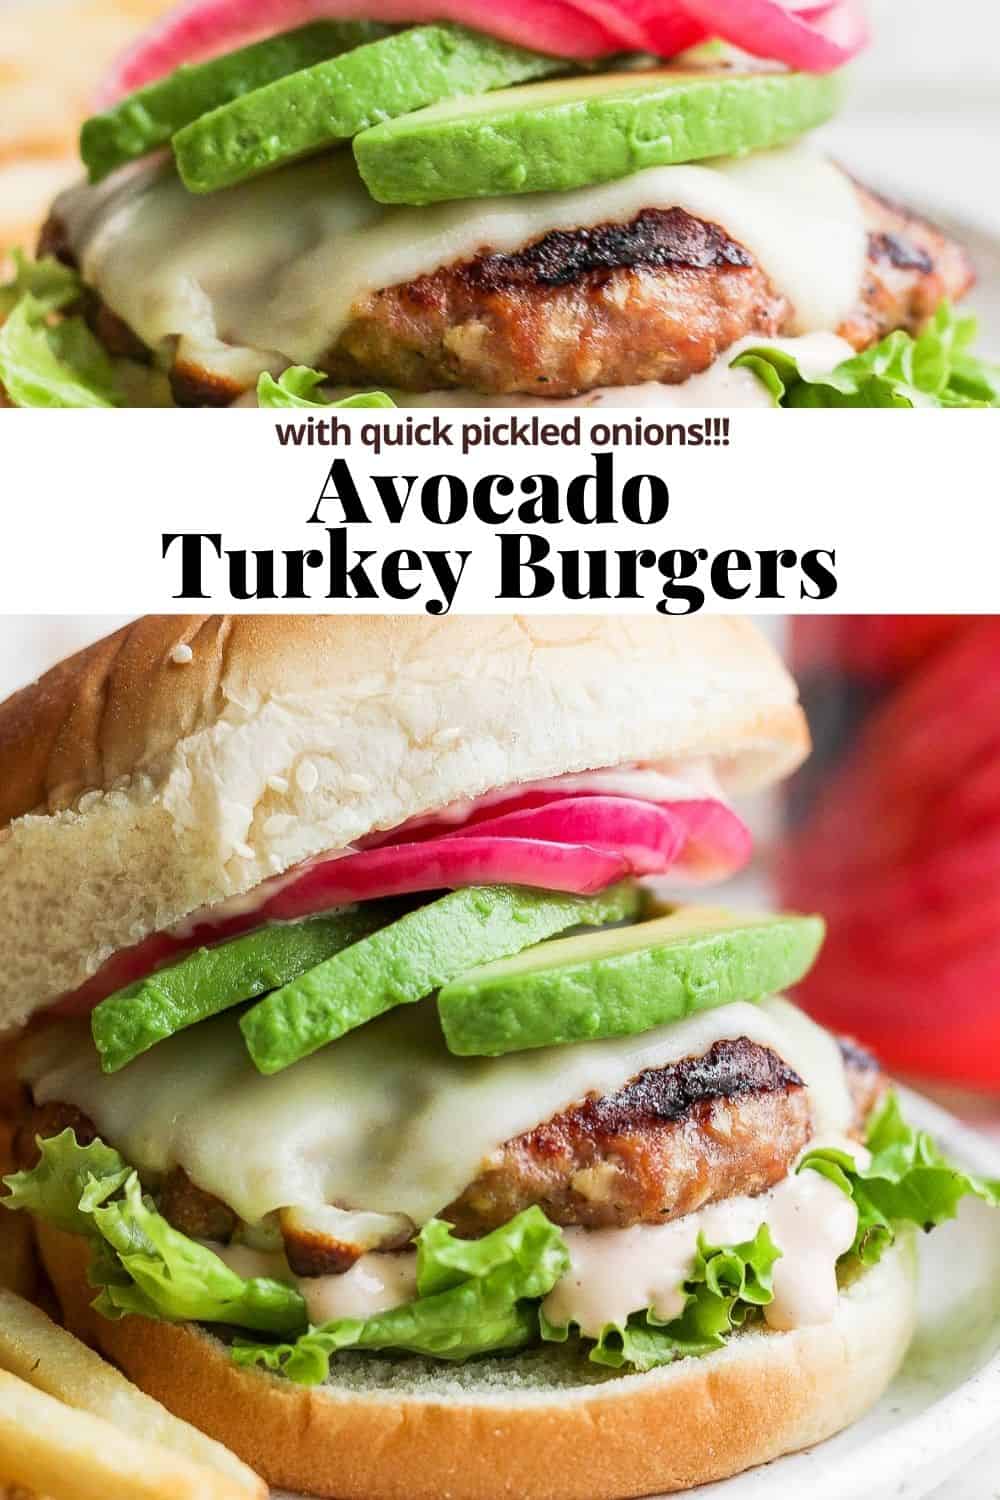 Pinterest image for an avocado turkey burger.